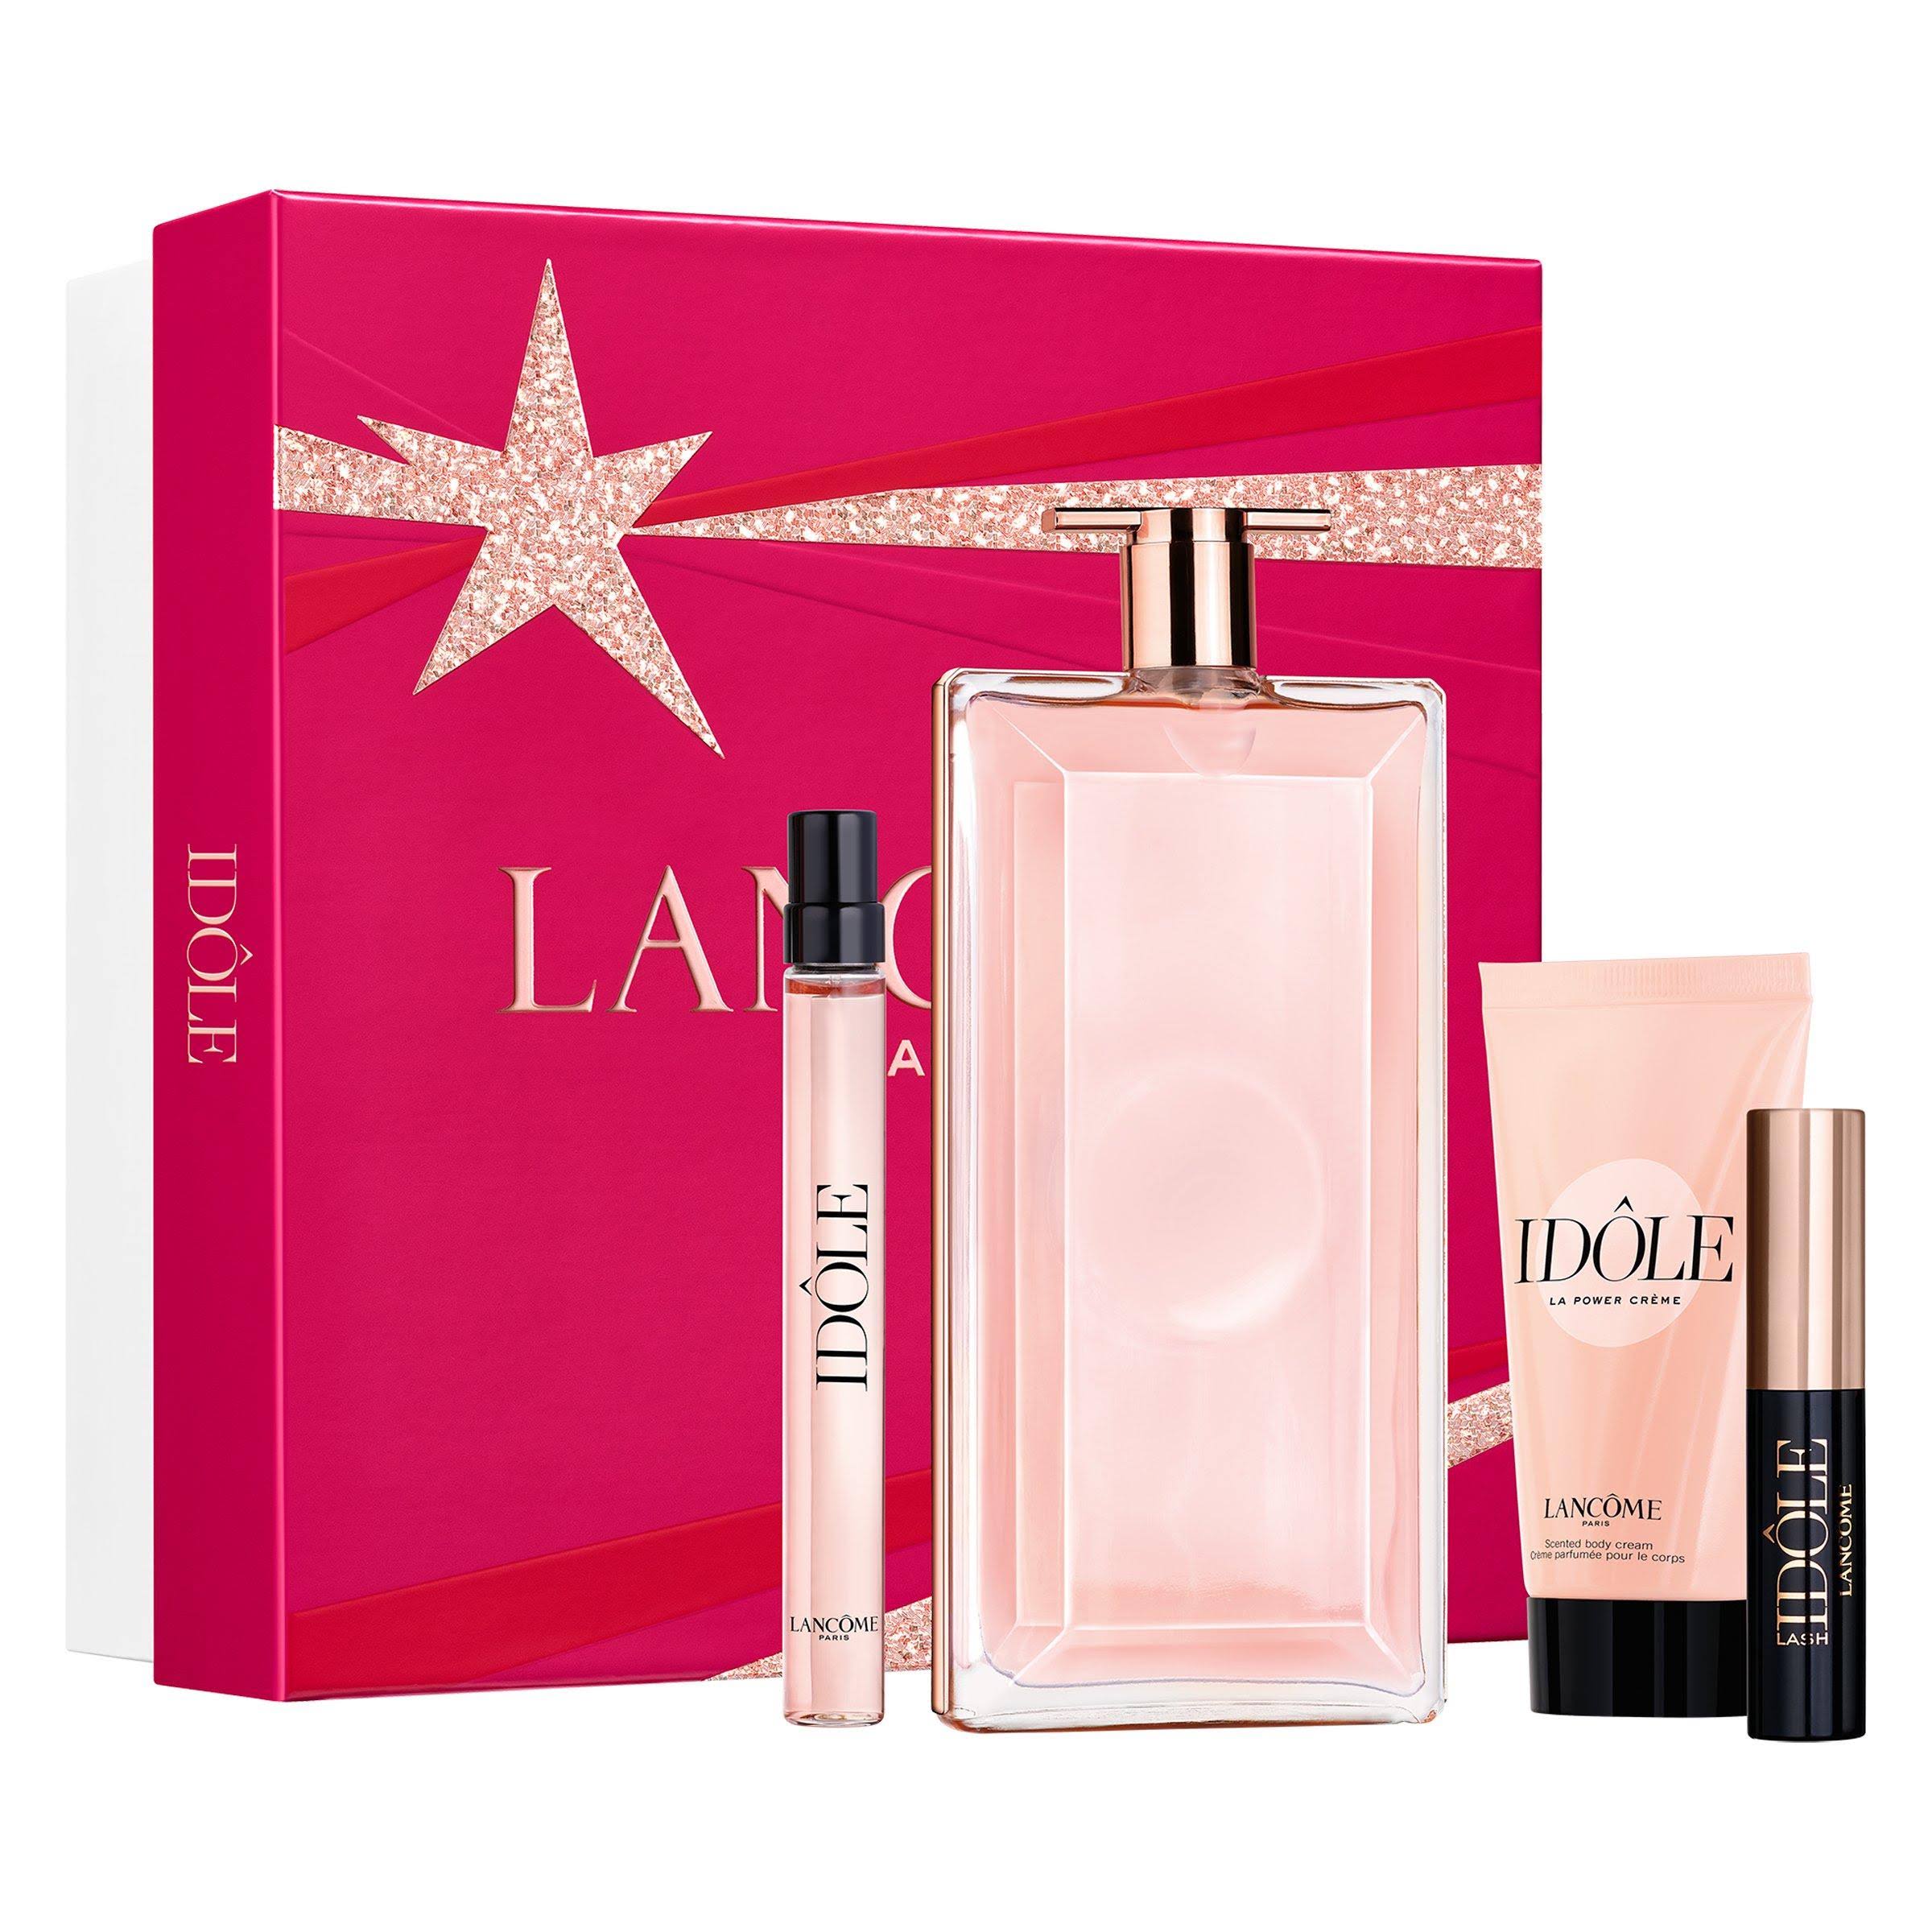 Lancome Idole Perfume Gift Set For Women